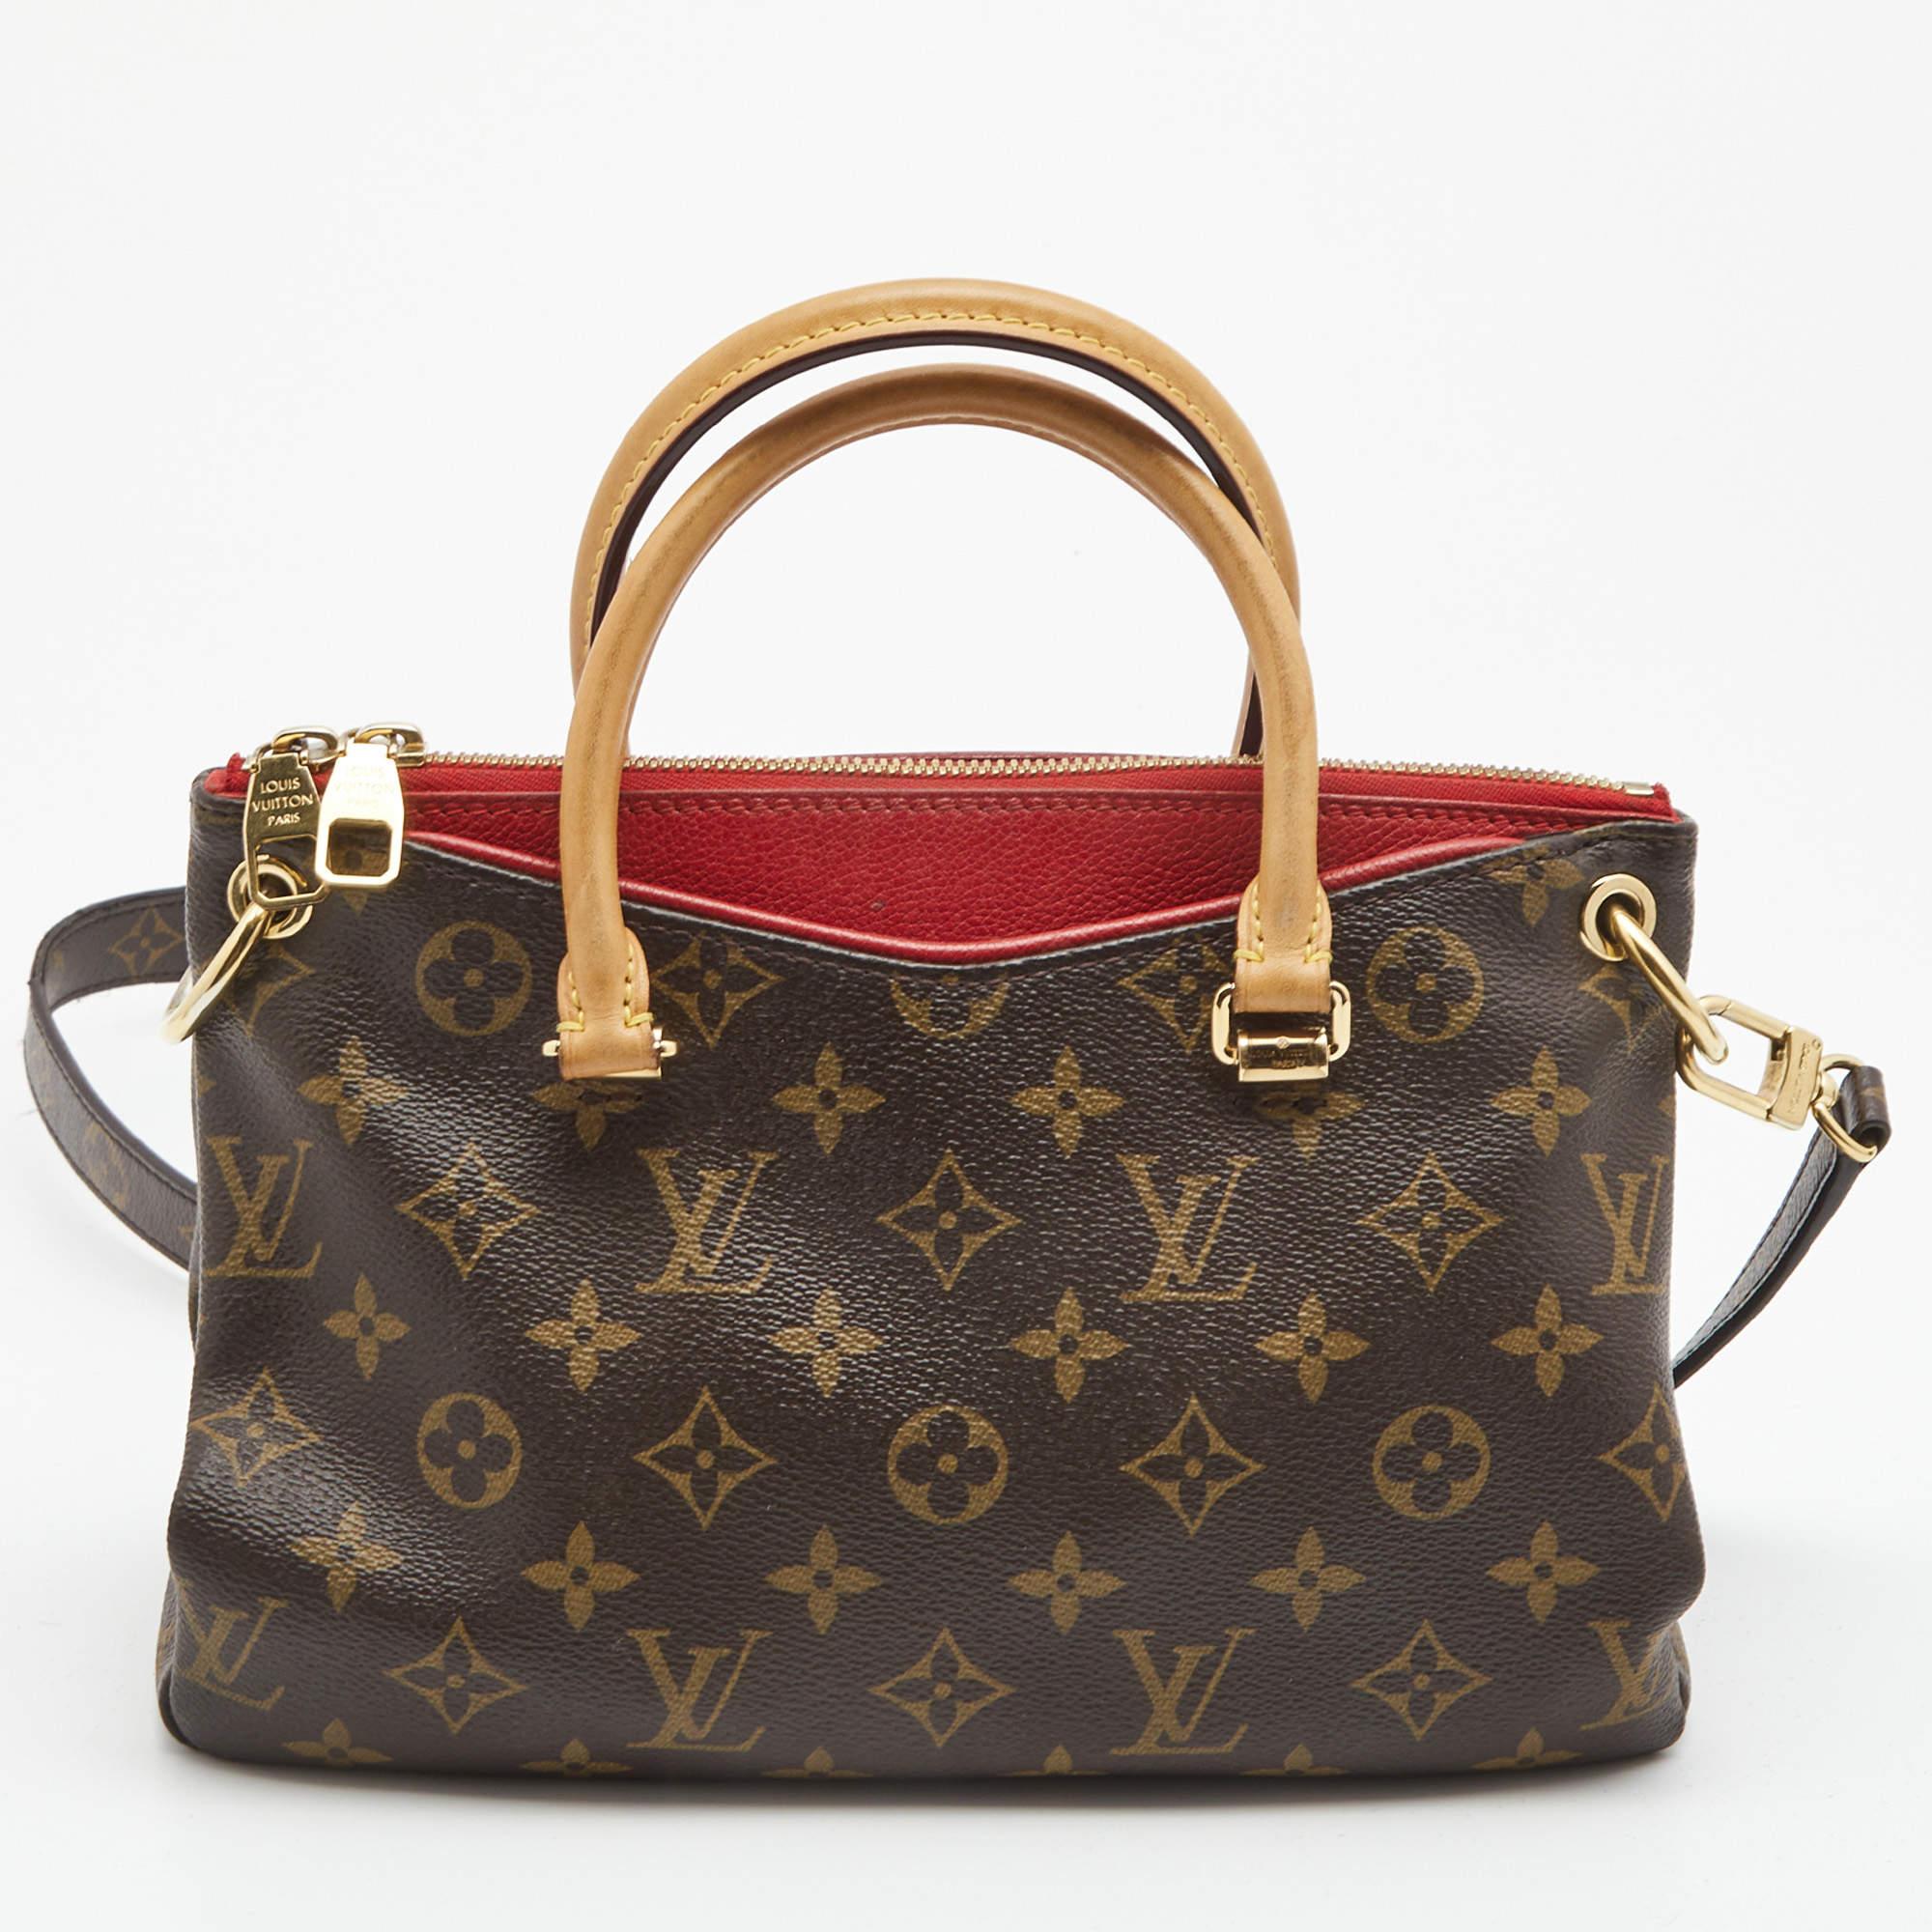 Louis Vuitton Pallas Bb Bag - For Sale on 1stDibs